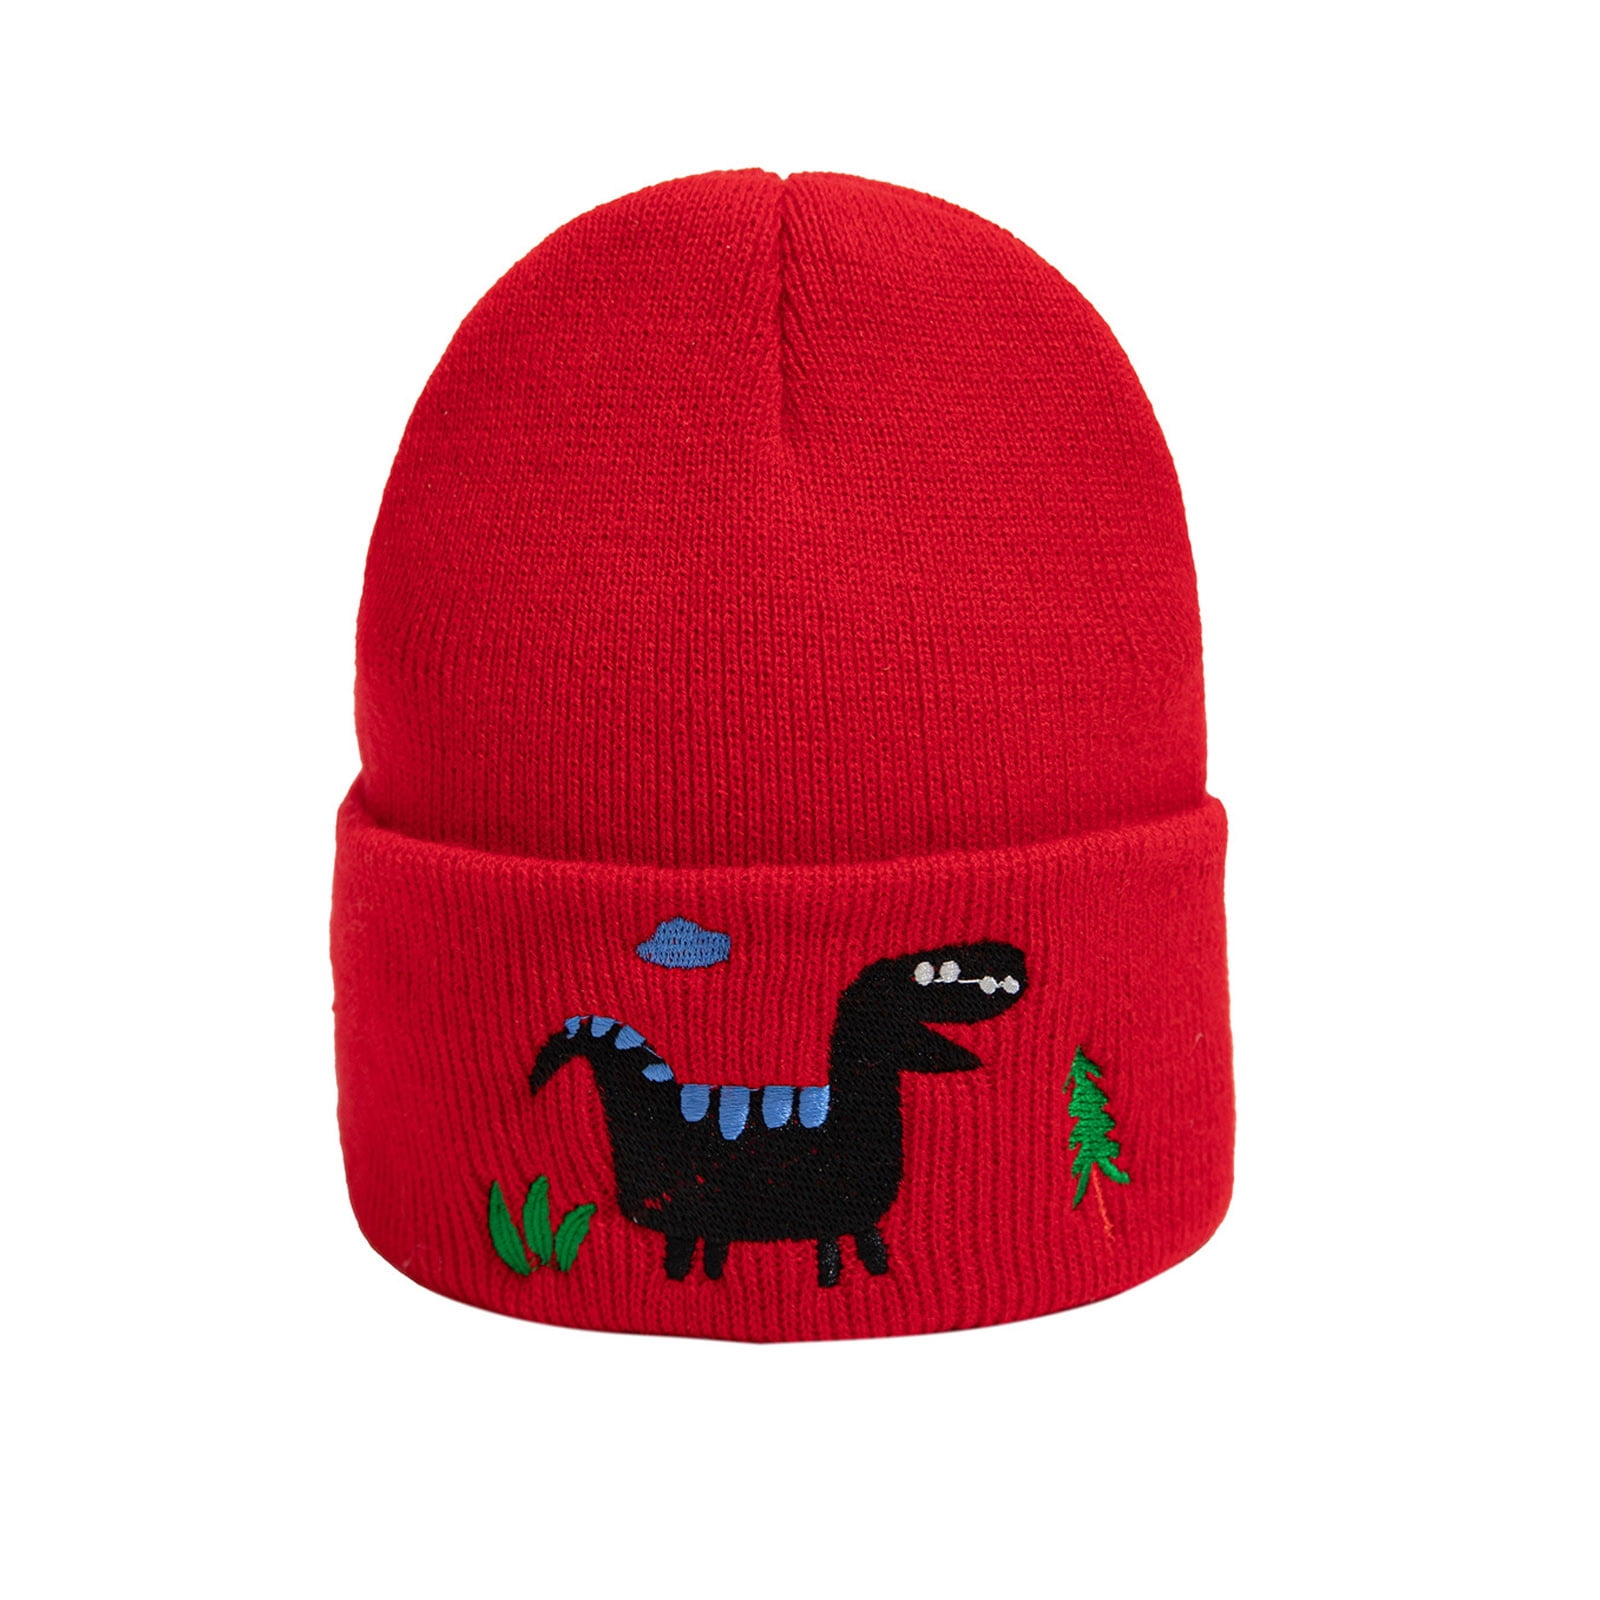 Huatansy Kids Beanie Caps Mudvayne Logo Knit Hat for Boy and Girl Black